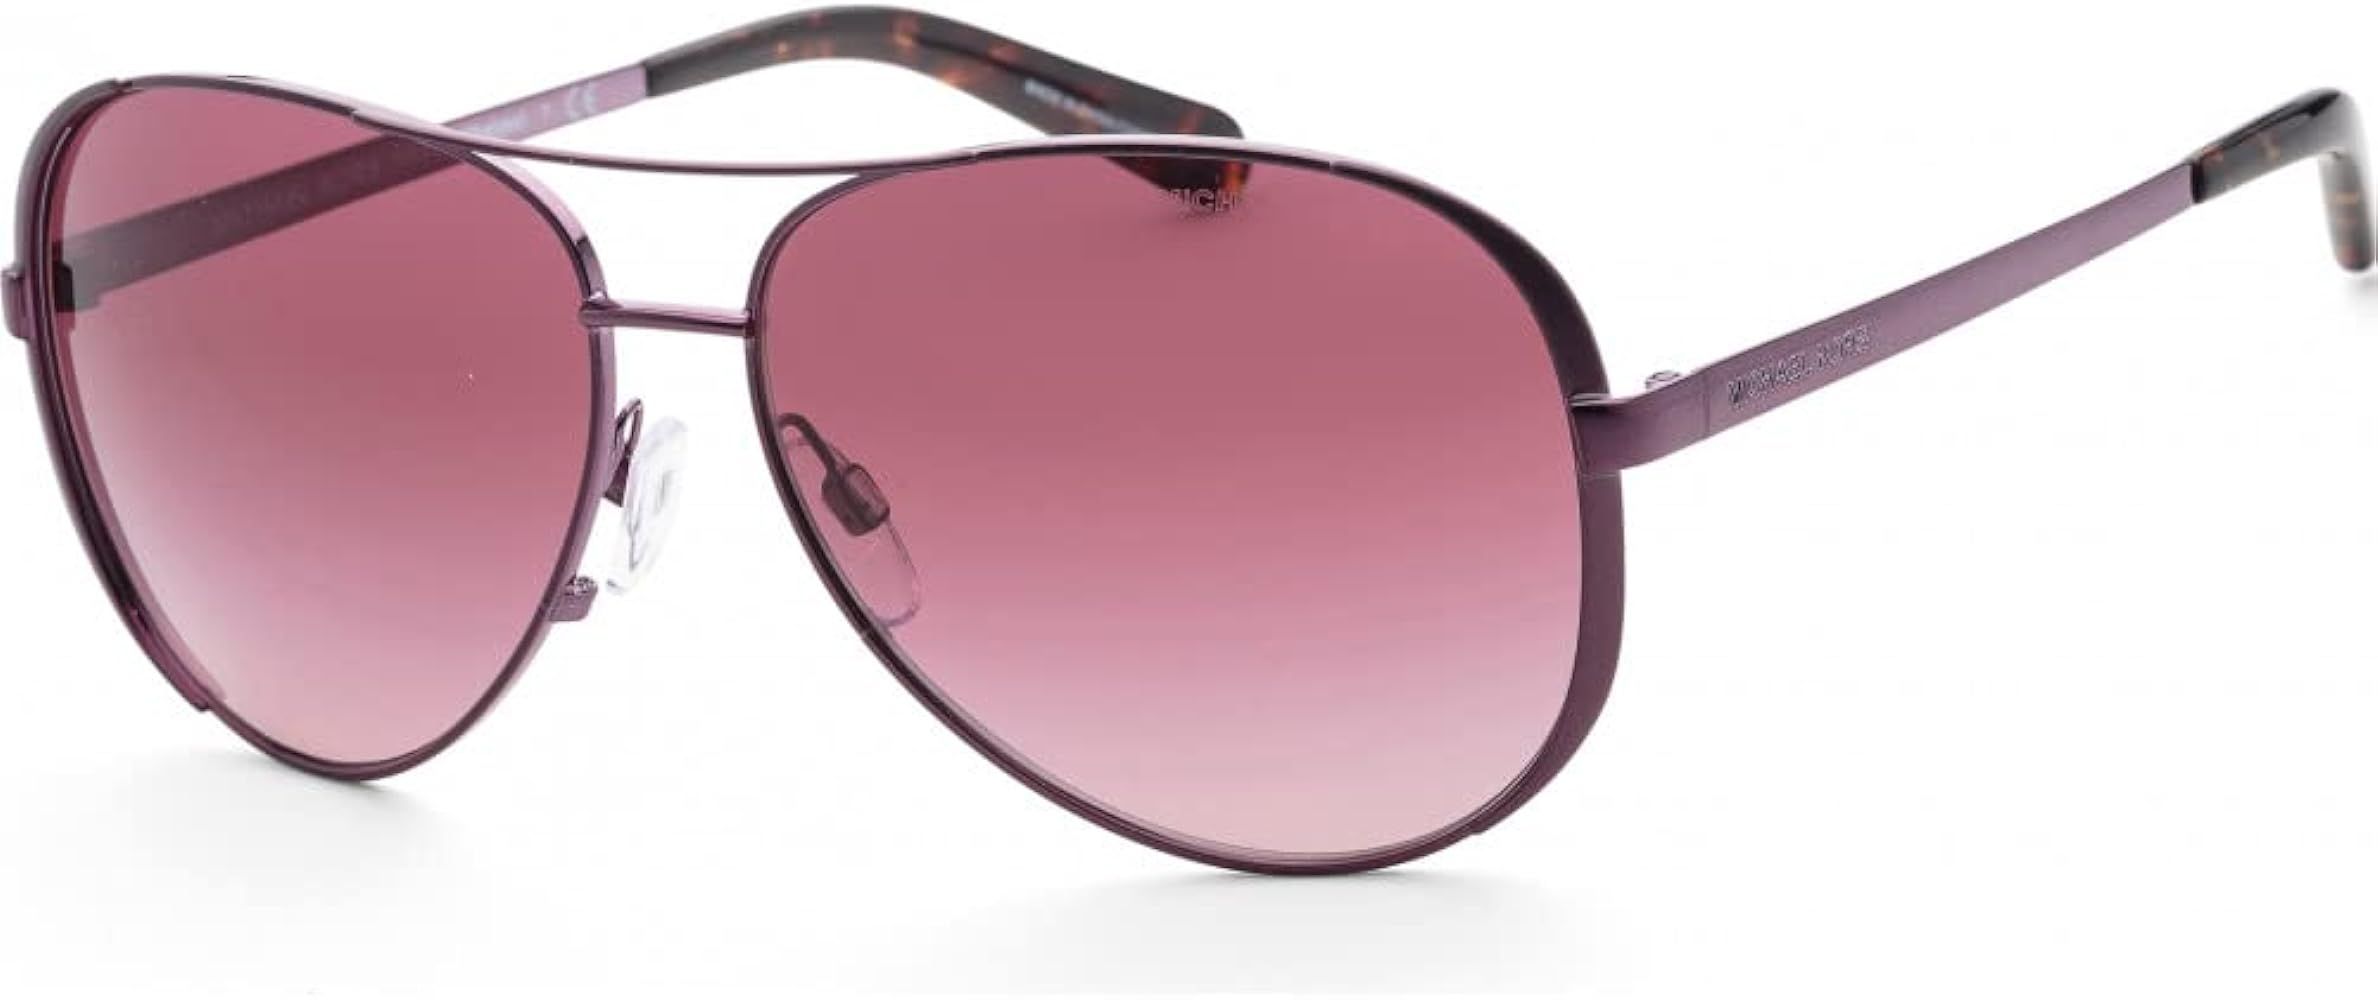 Michael Kors CHELSEA MK5004 Sunglasses 11588H-59 - Plum Frame, Burgundy Gradient MK5004-11588H-59 | Amazon (US)